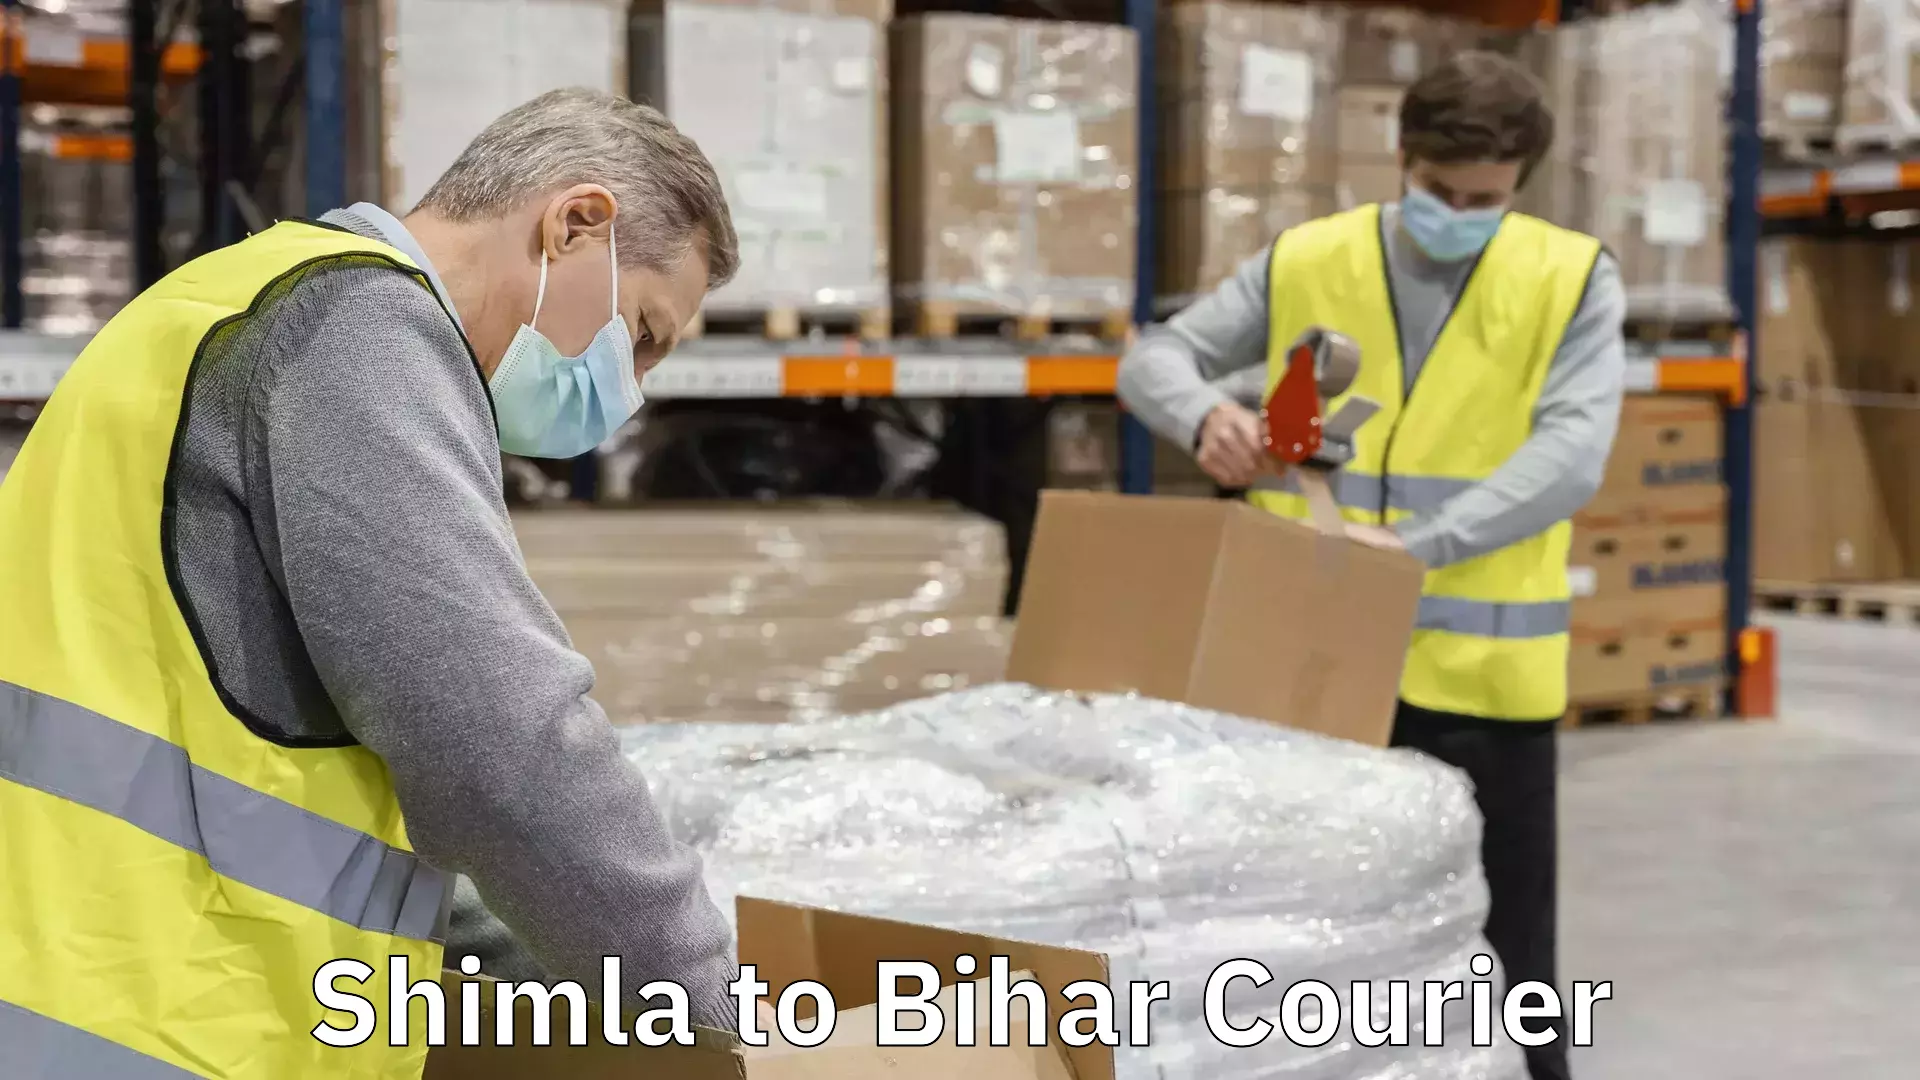 Business delivery service Shimla to Bihar